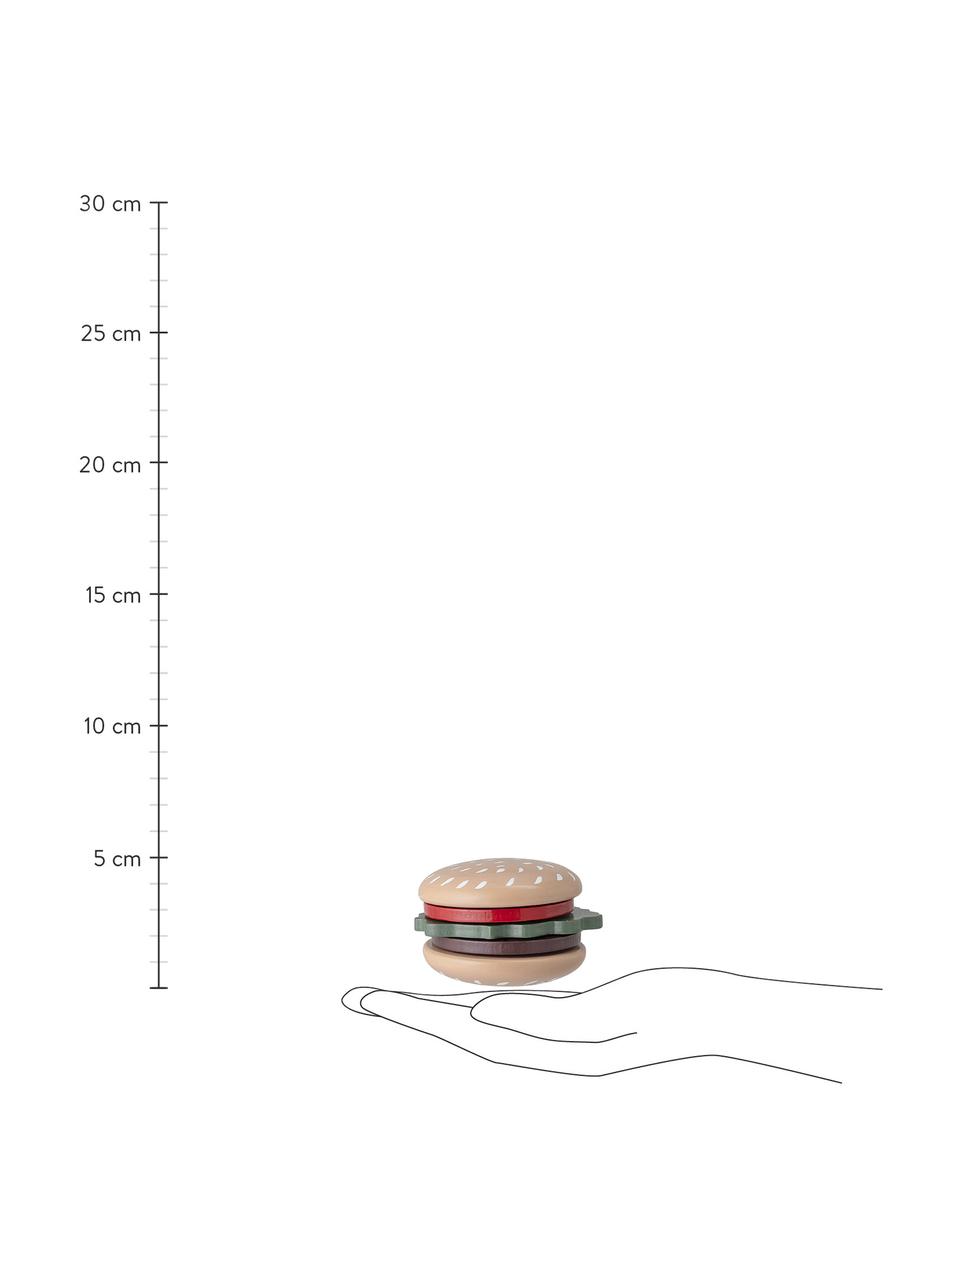 Speelgoedset Hamburger, Lotushout, MDF, nylon, Multicolour, Ø 7 x H 5 cm